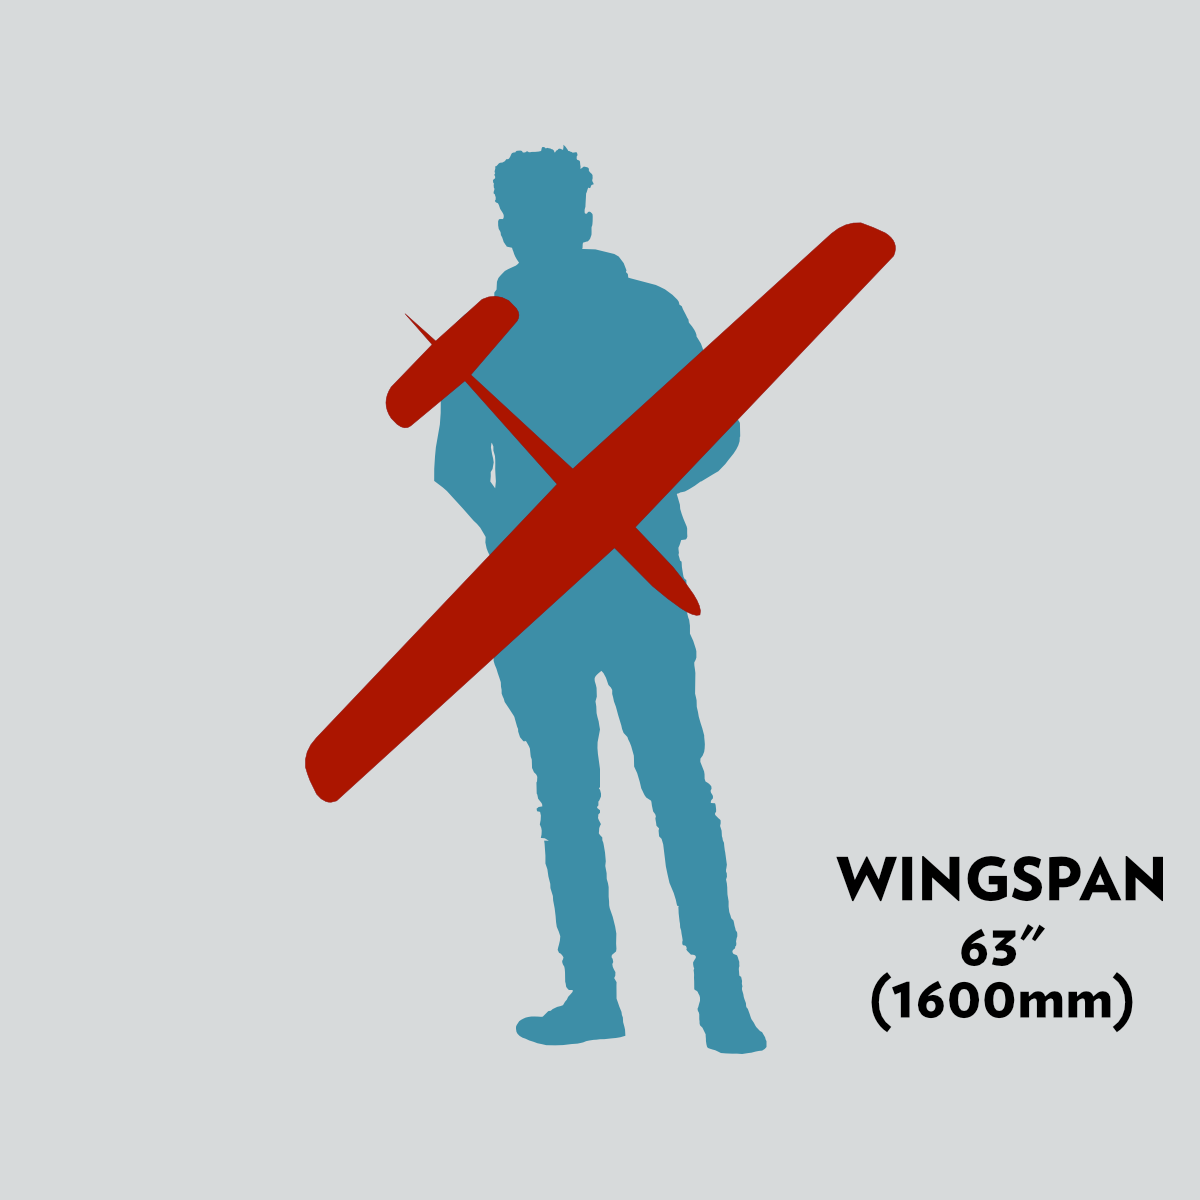 63" (1600mm) wingspan